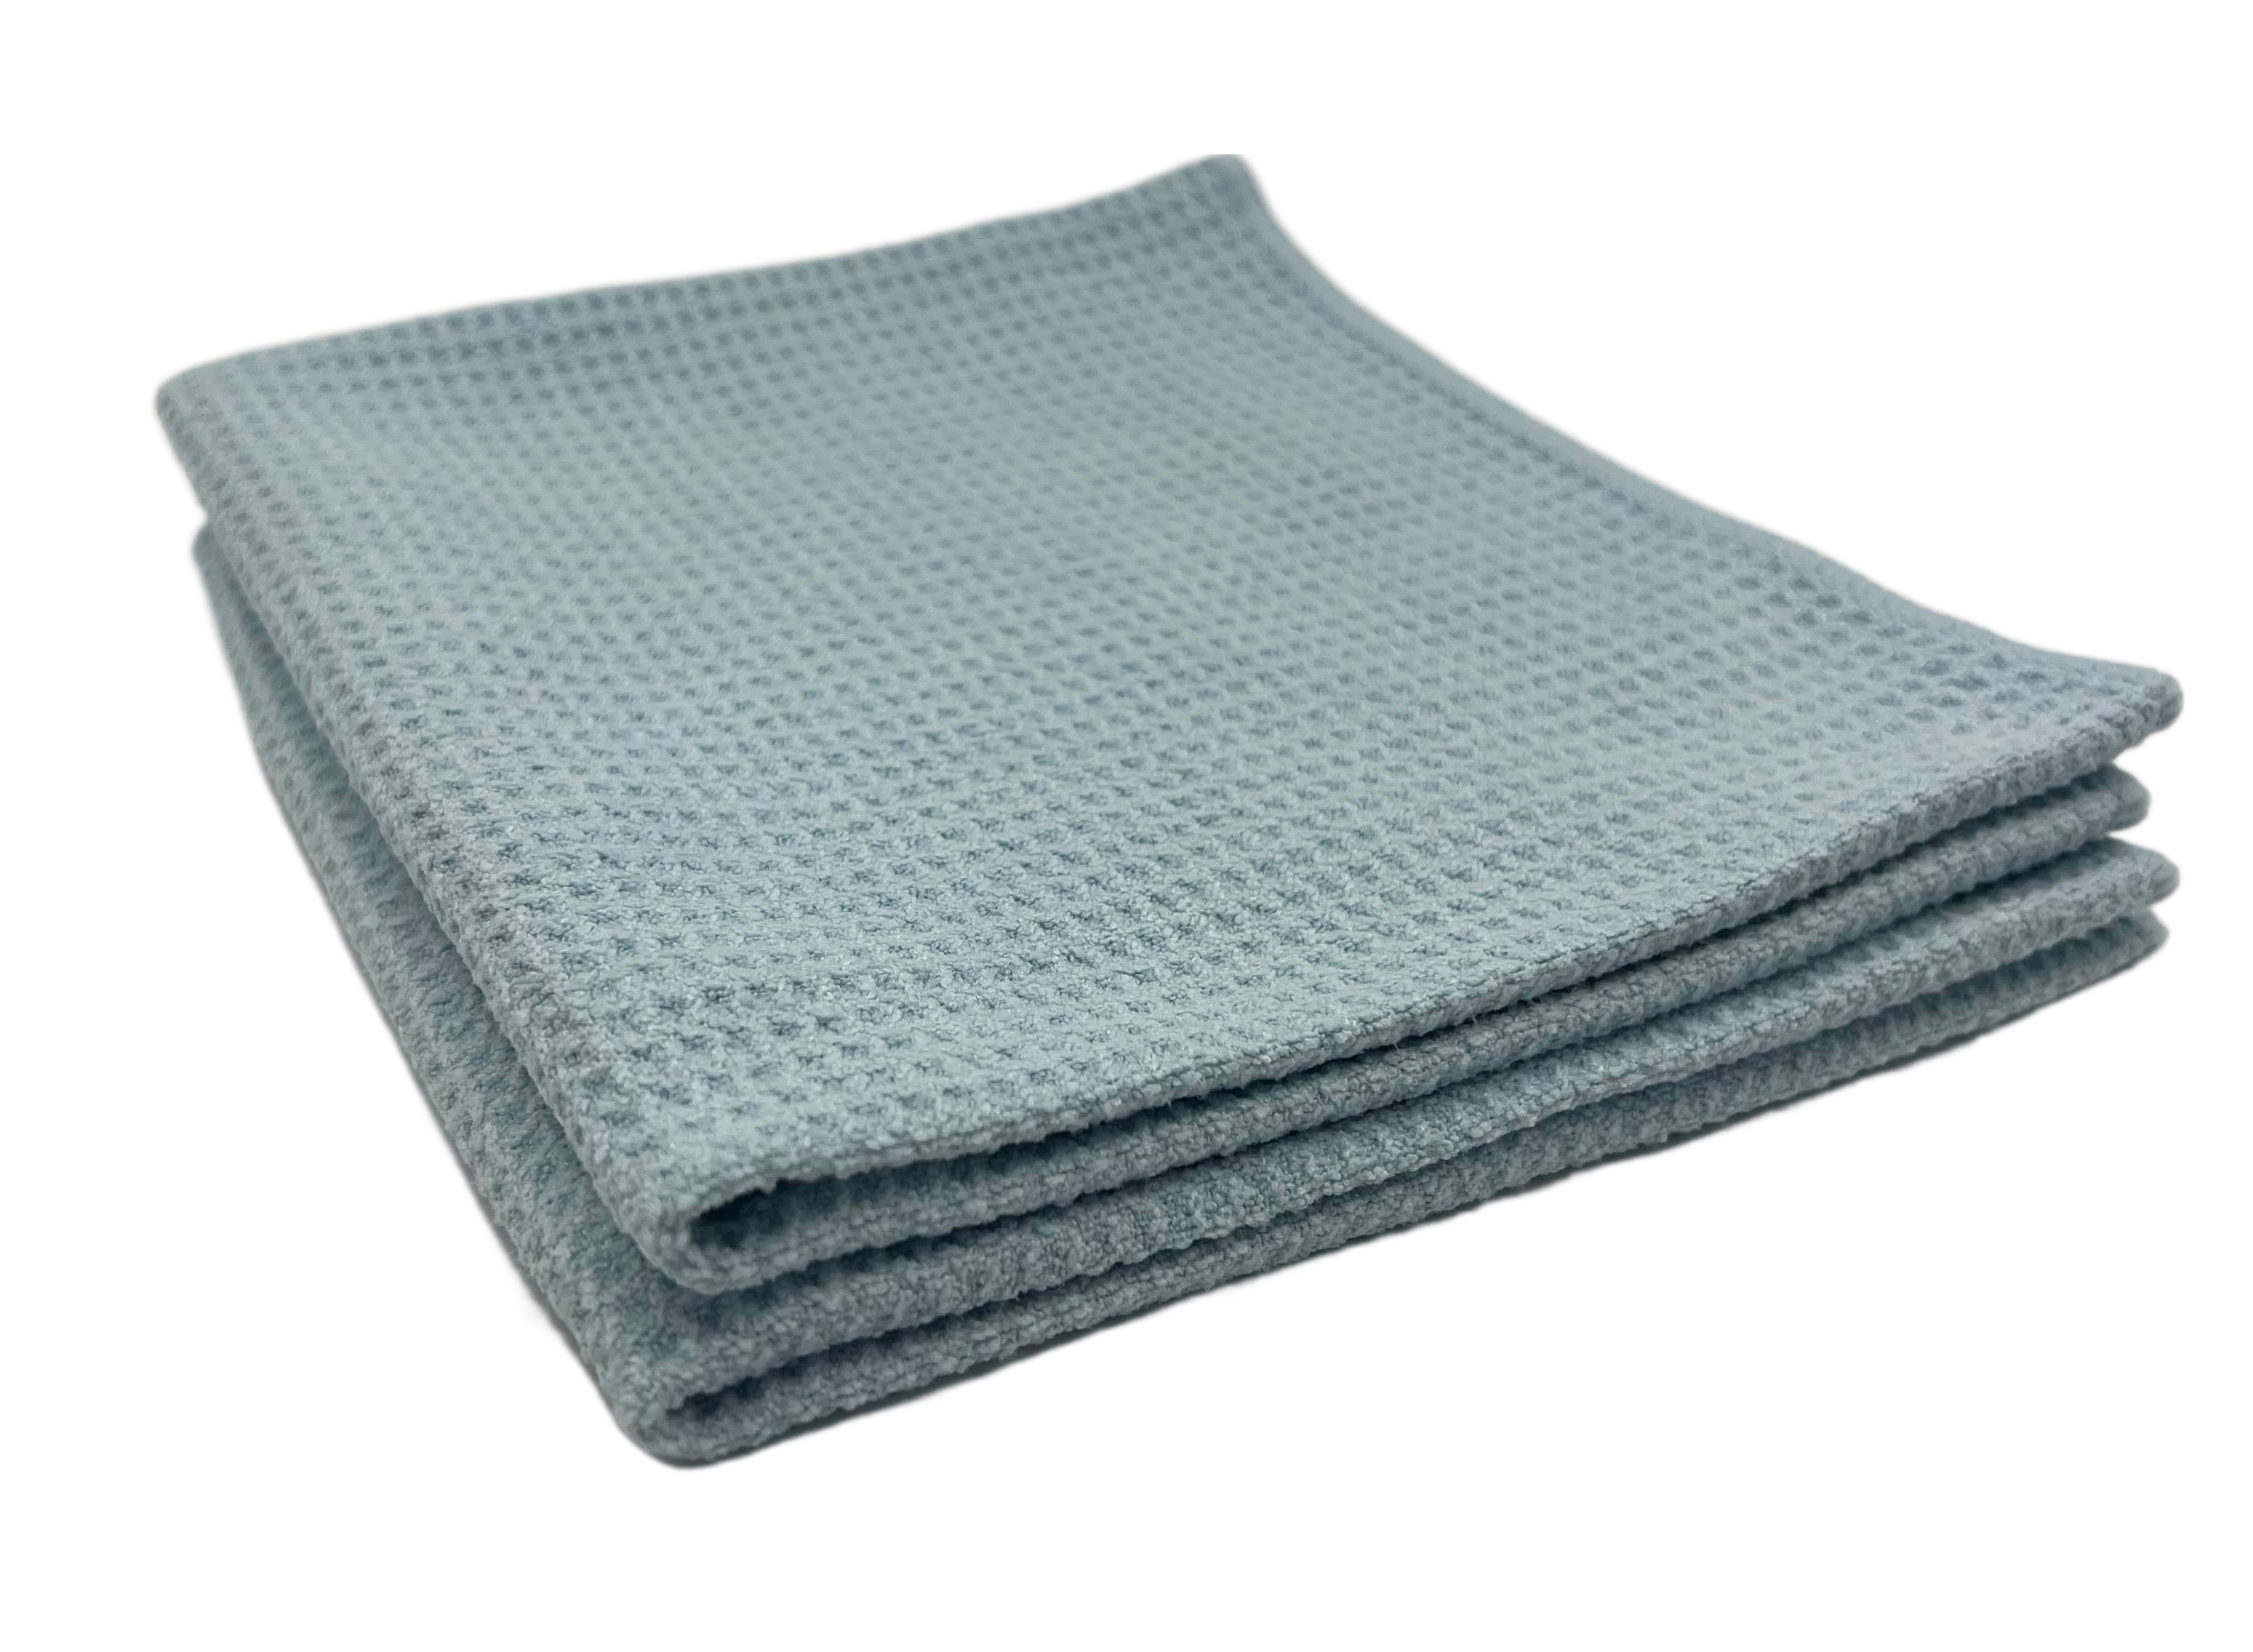 12”x12 Waffle Weave Towel, Microfiber, 300GSM